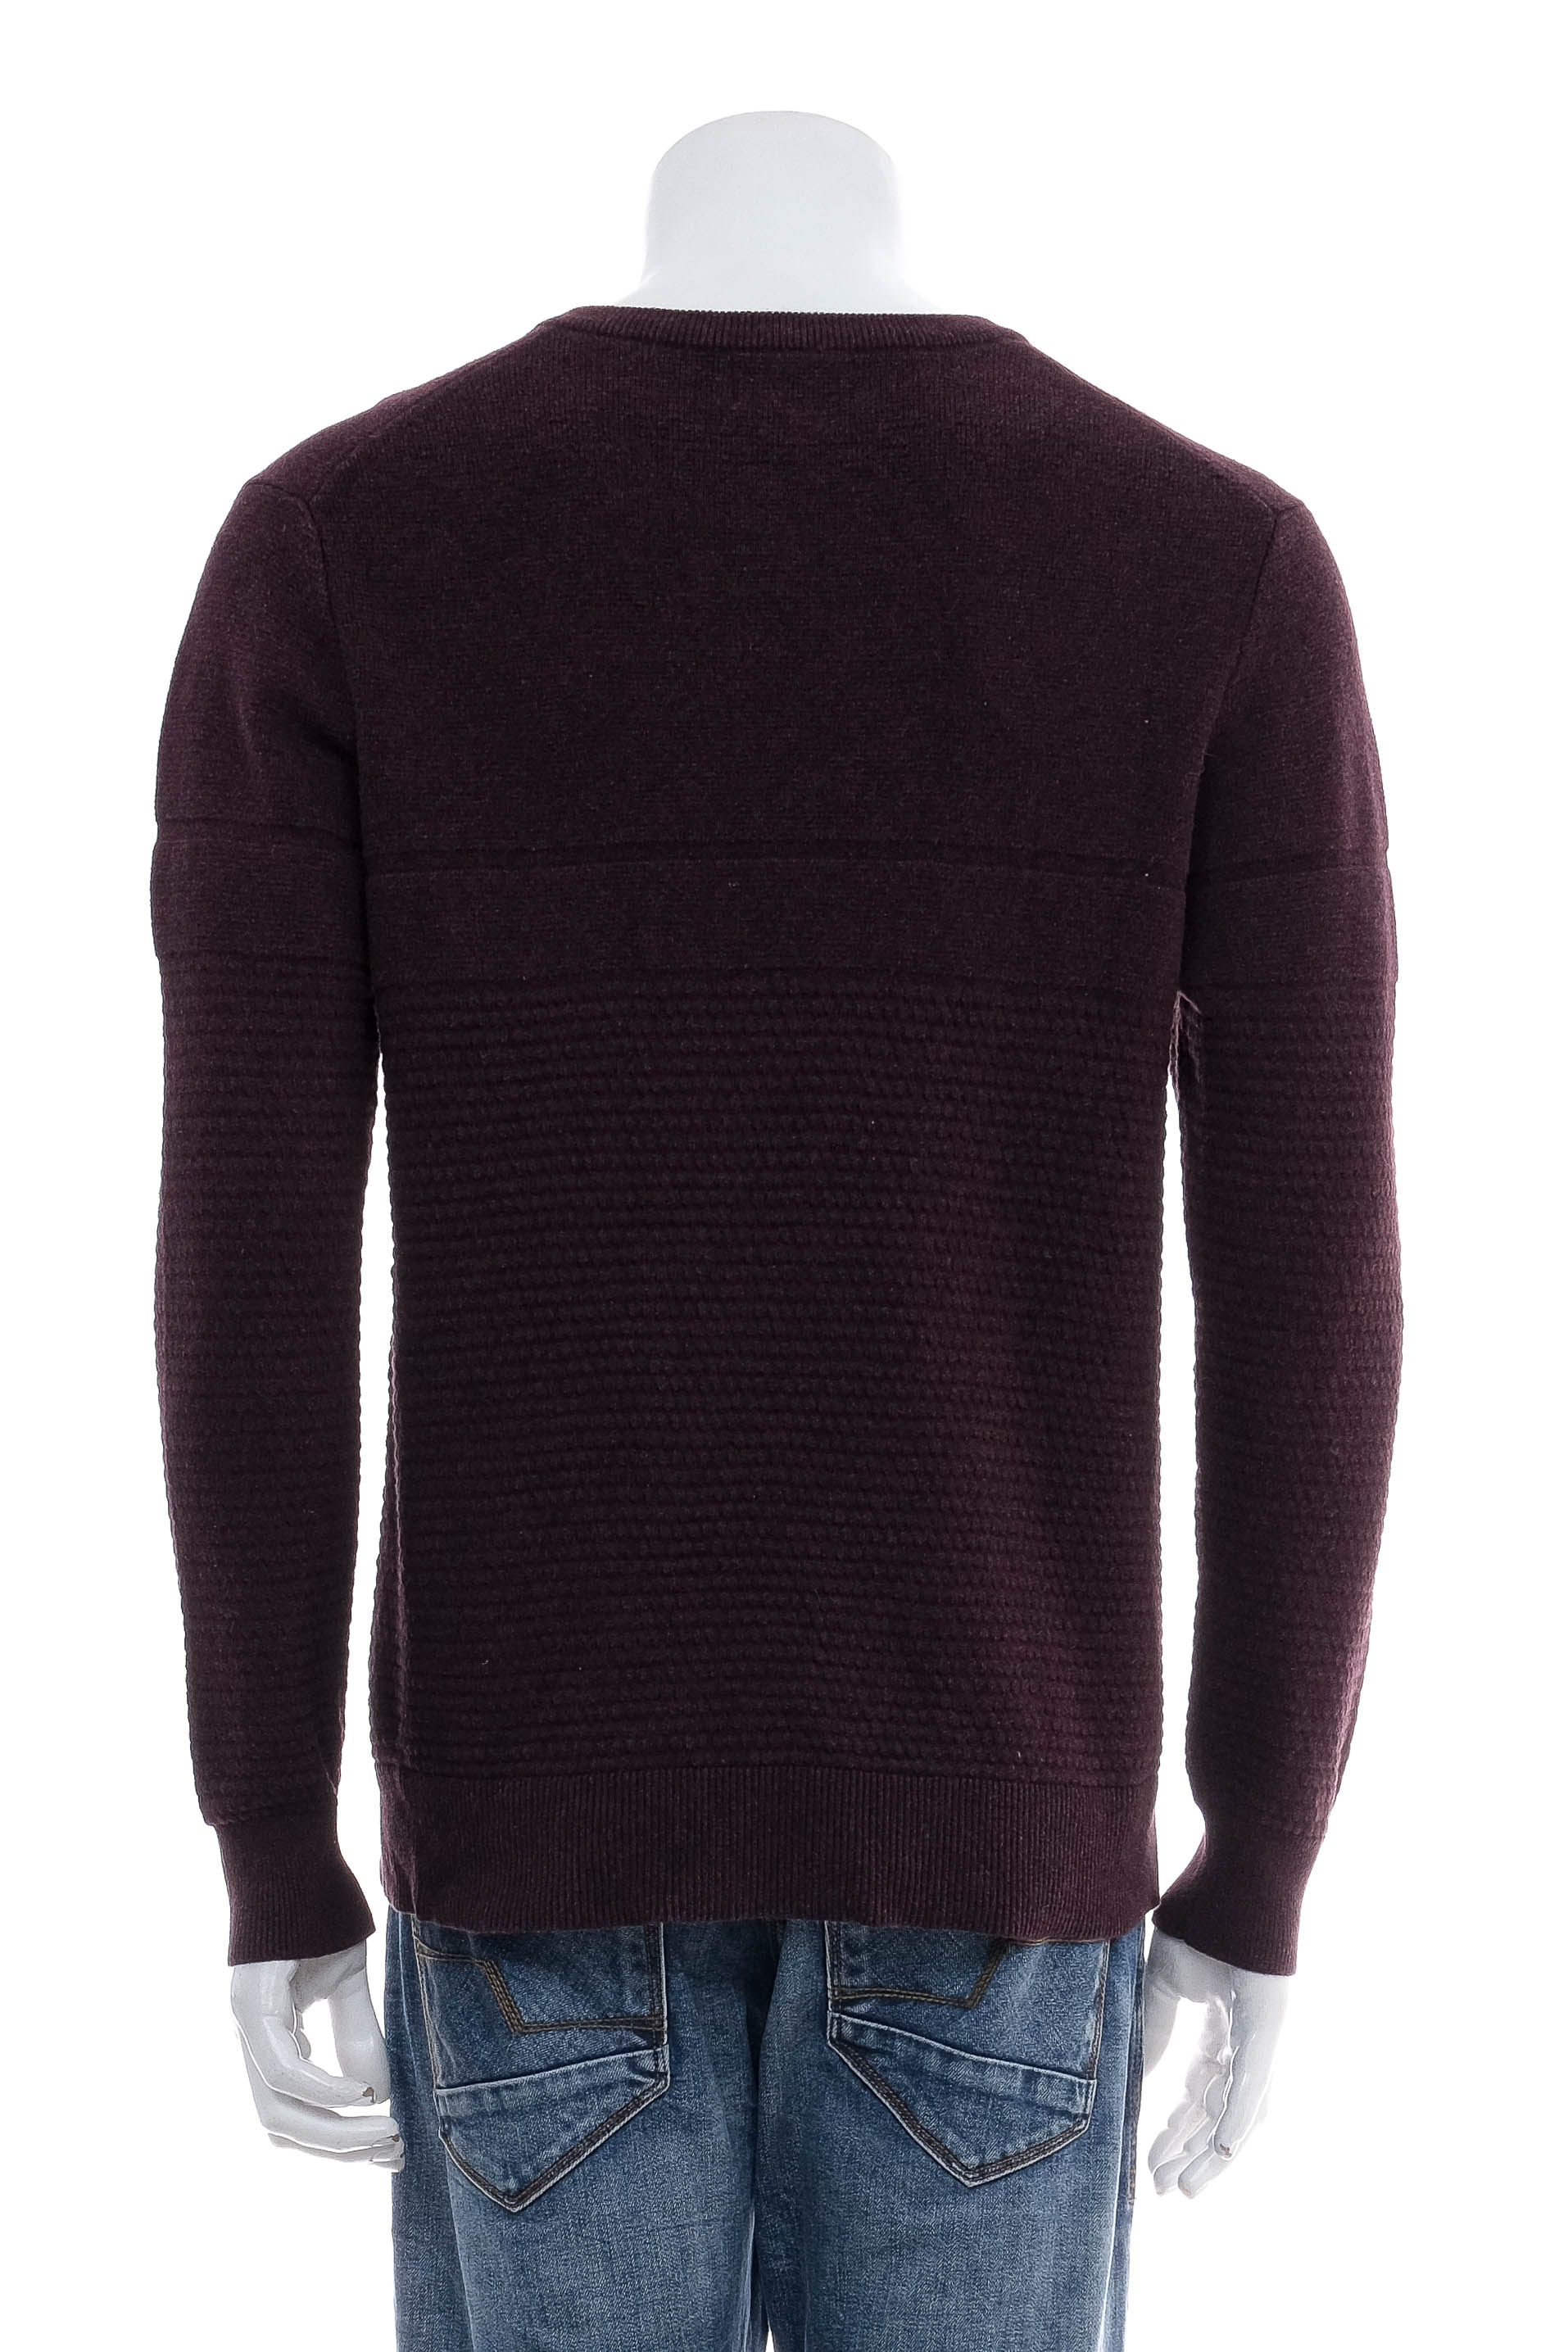 Men's sweater - Goodfellow & Co - 1